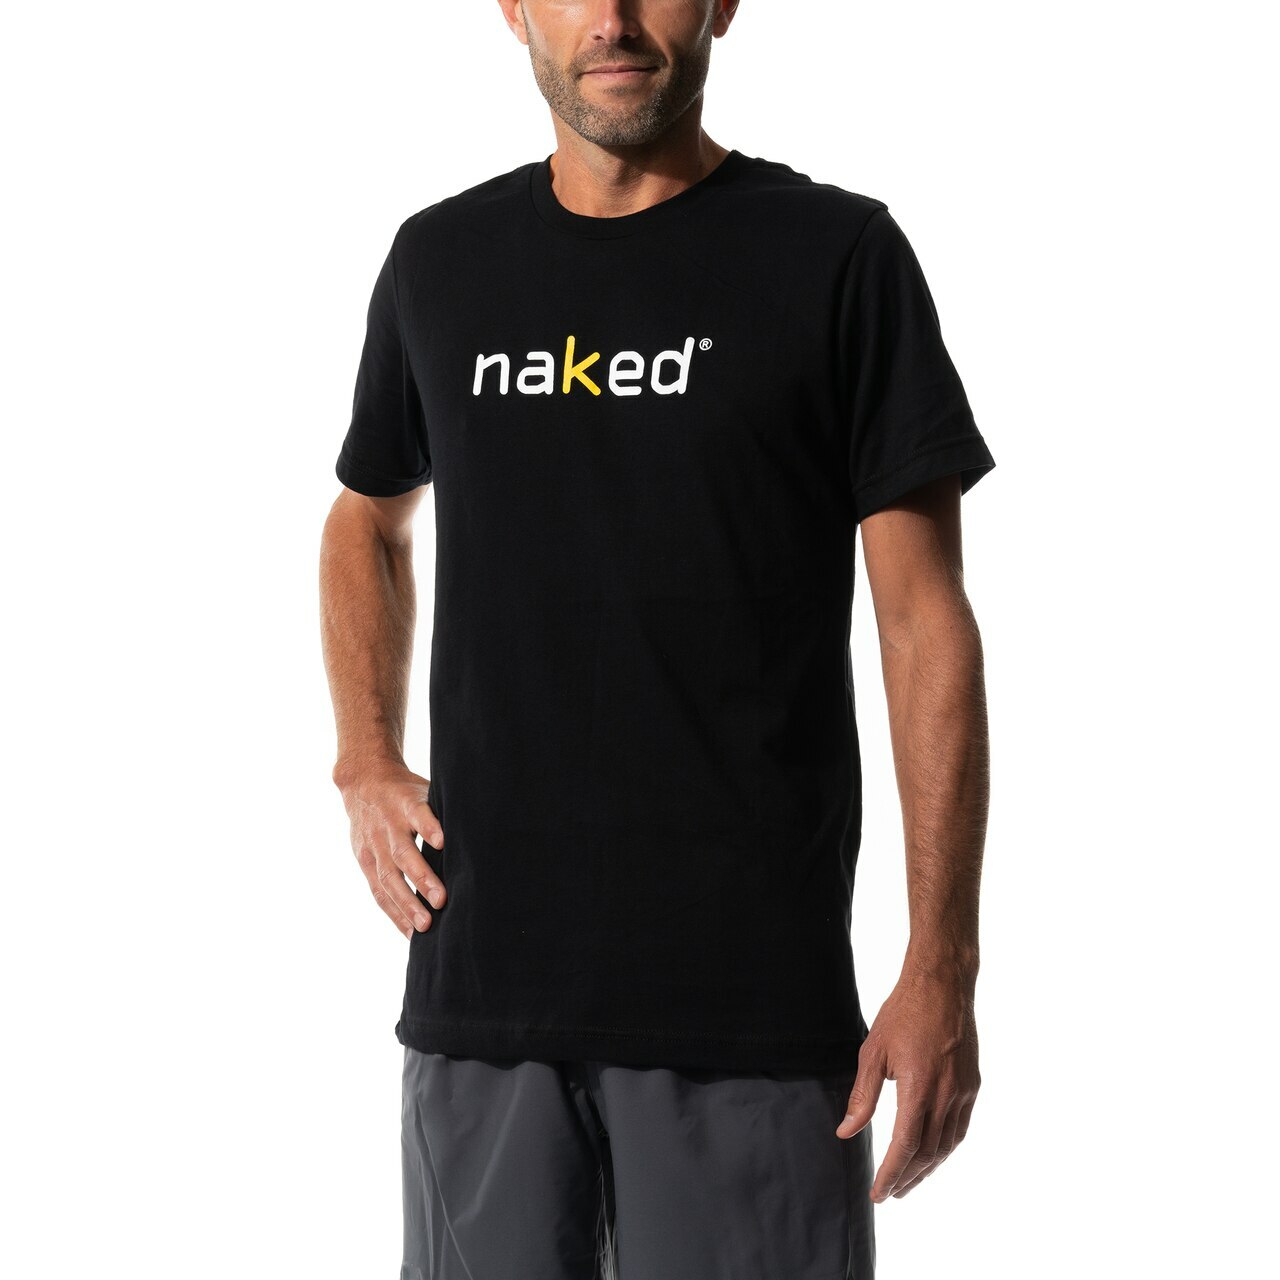 Naked® Casual Short Sleeve Tee Shirt - Men's